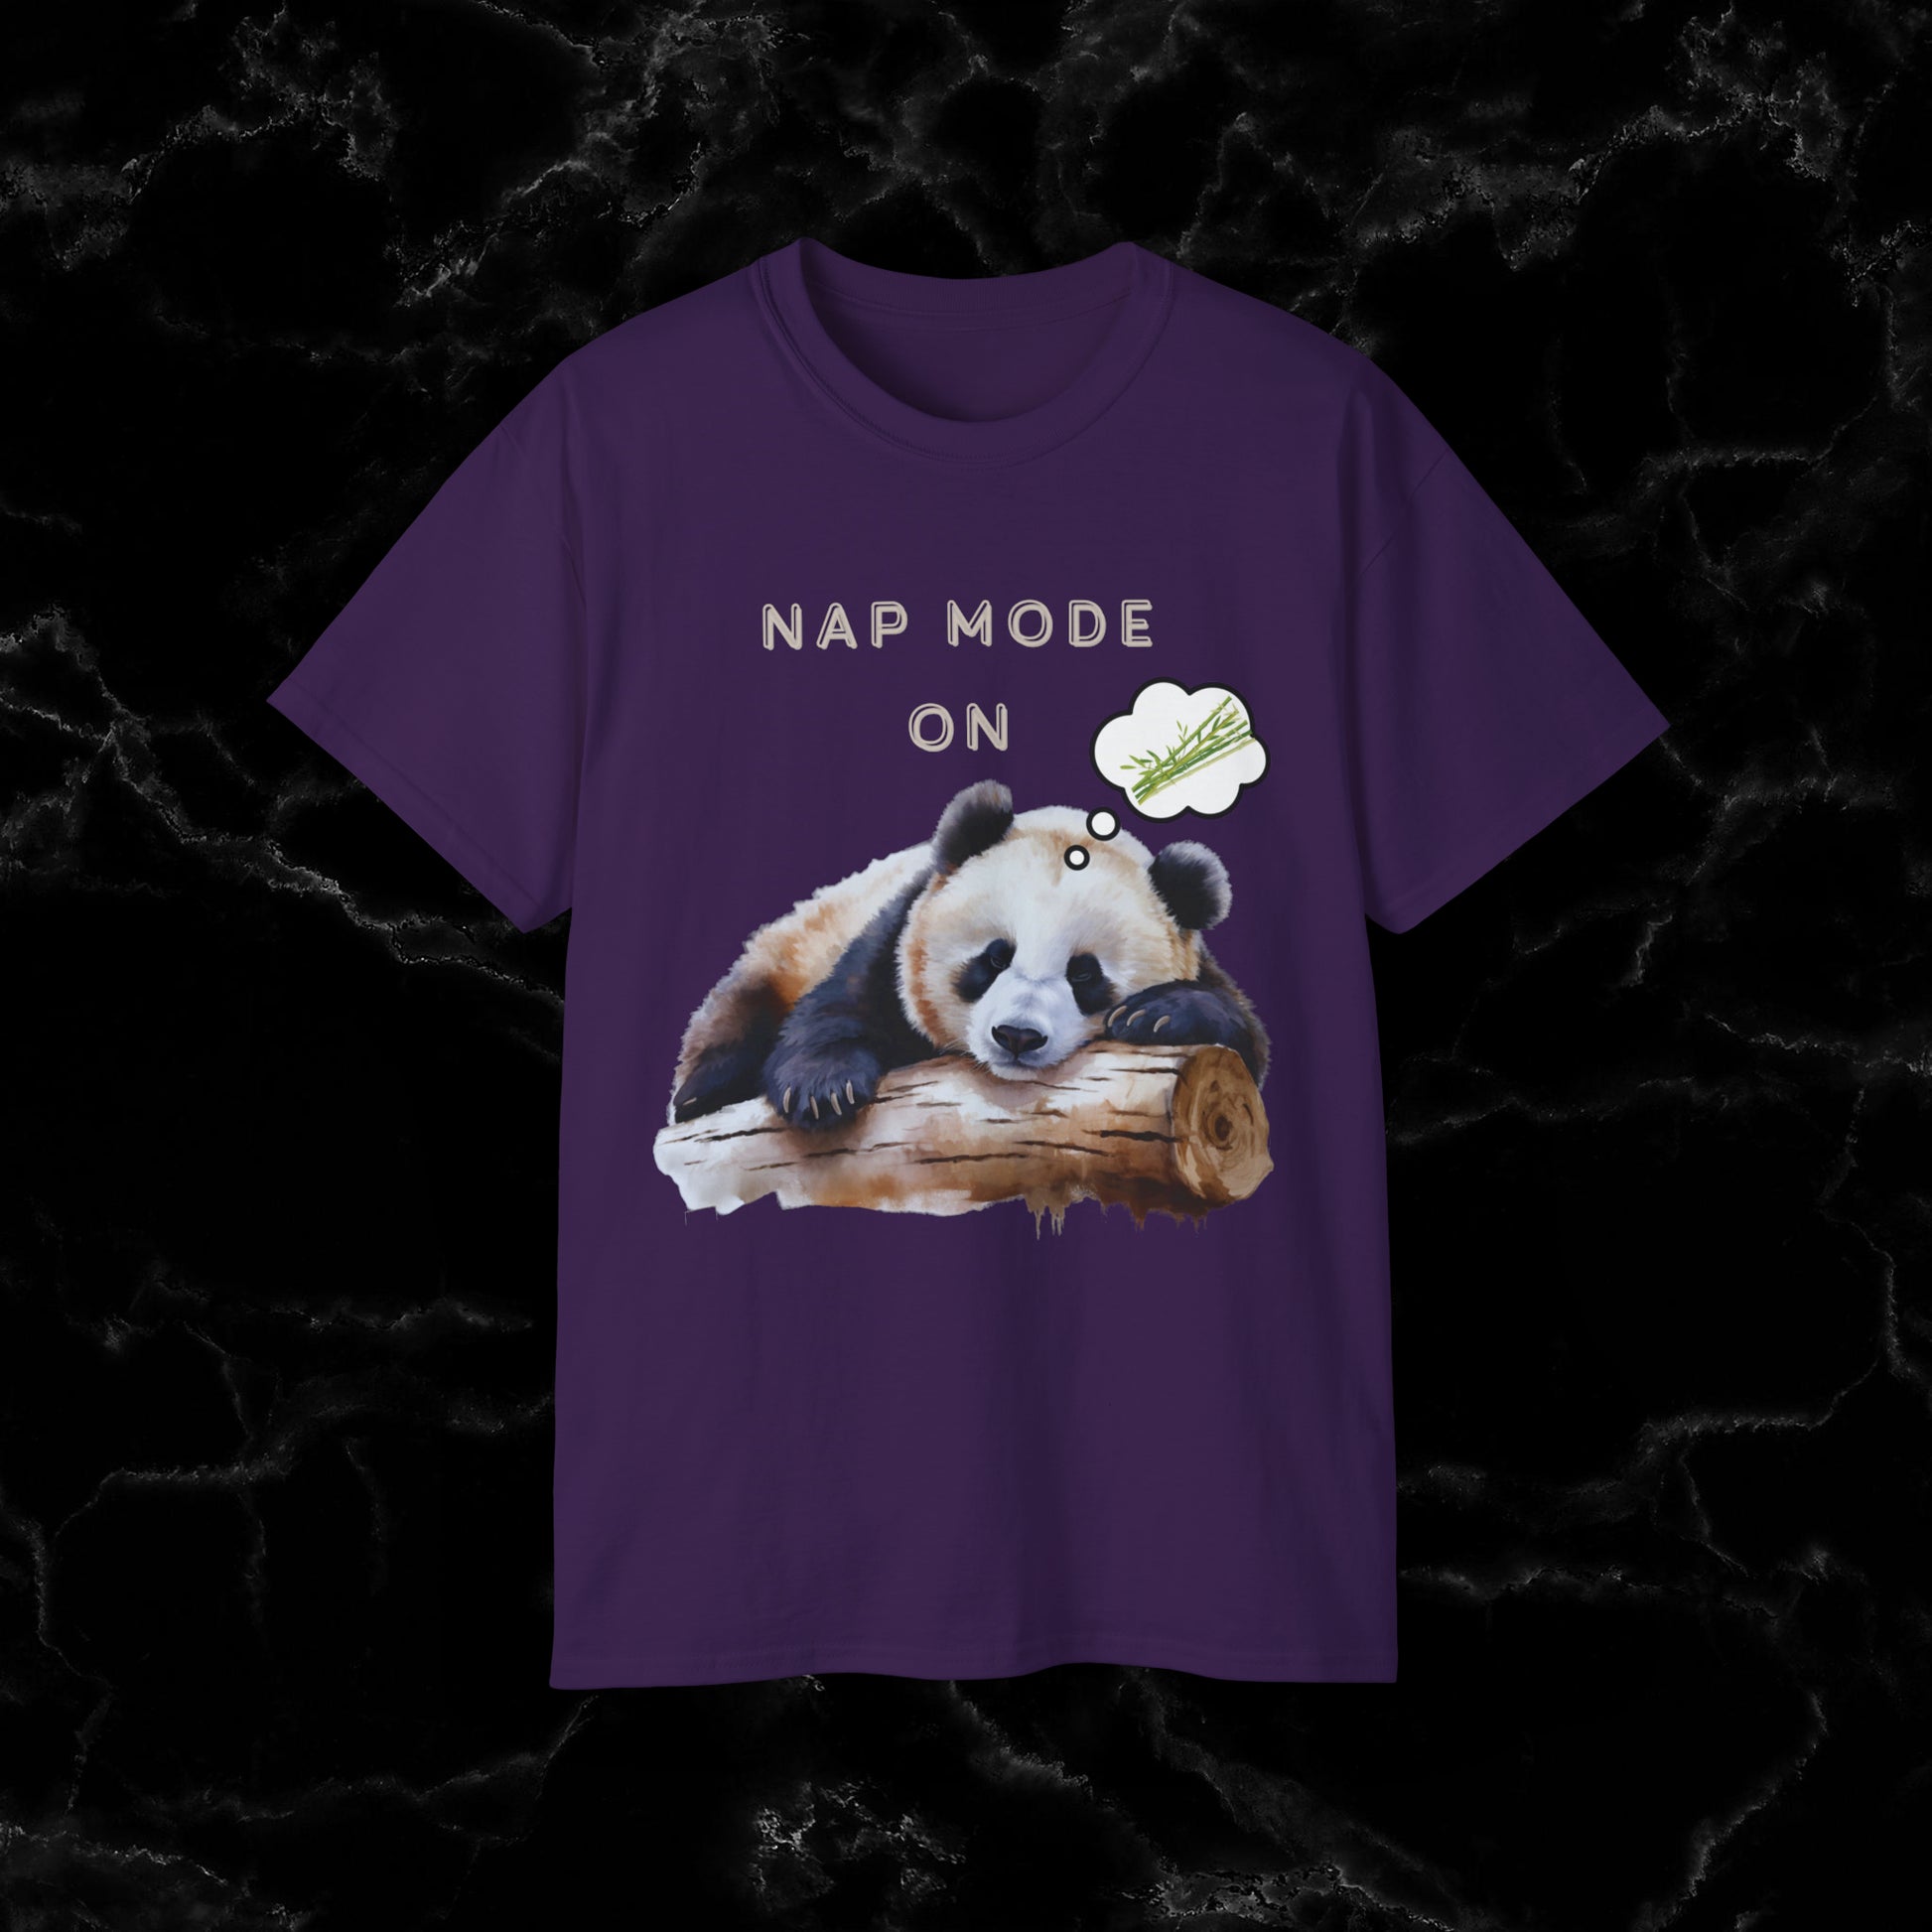 Nap Time Panda Unisex Funny Tee - Hilarious Panda Nap Mode On T-Shirt Purple M 